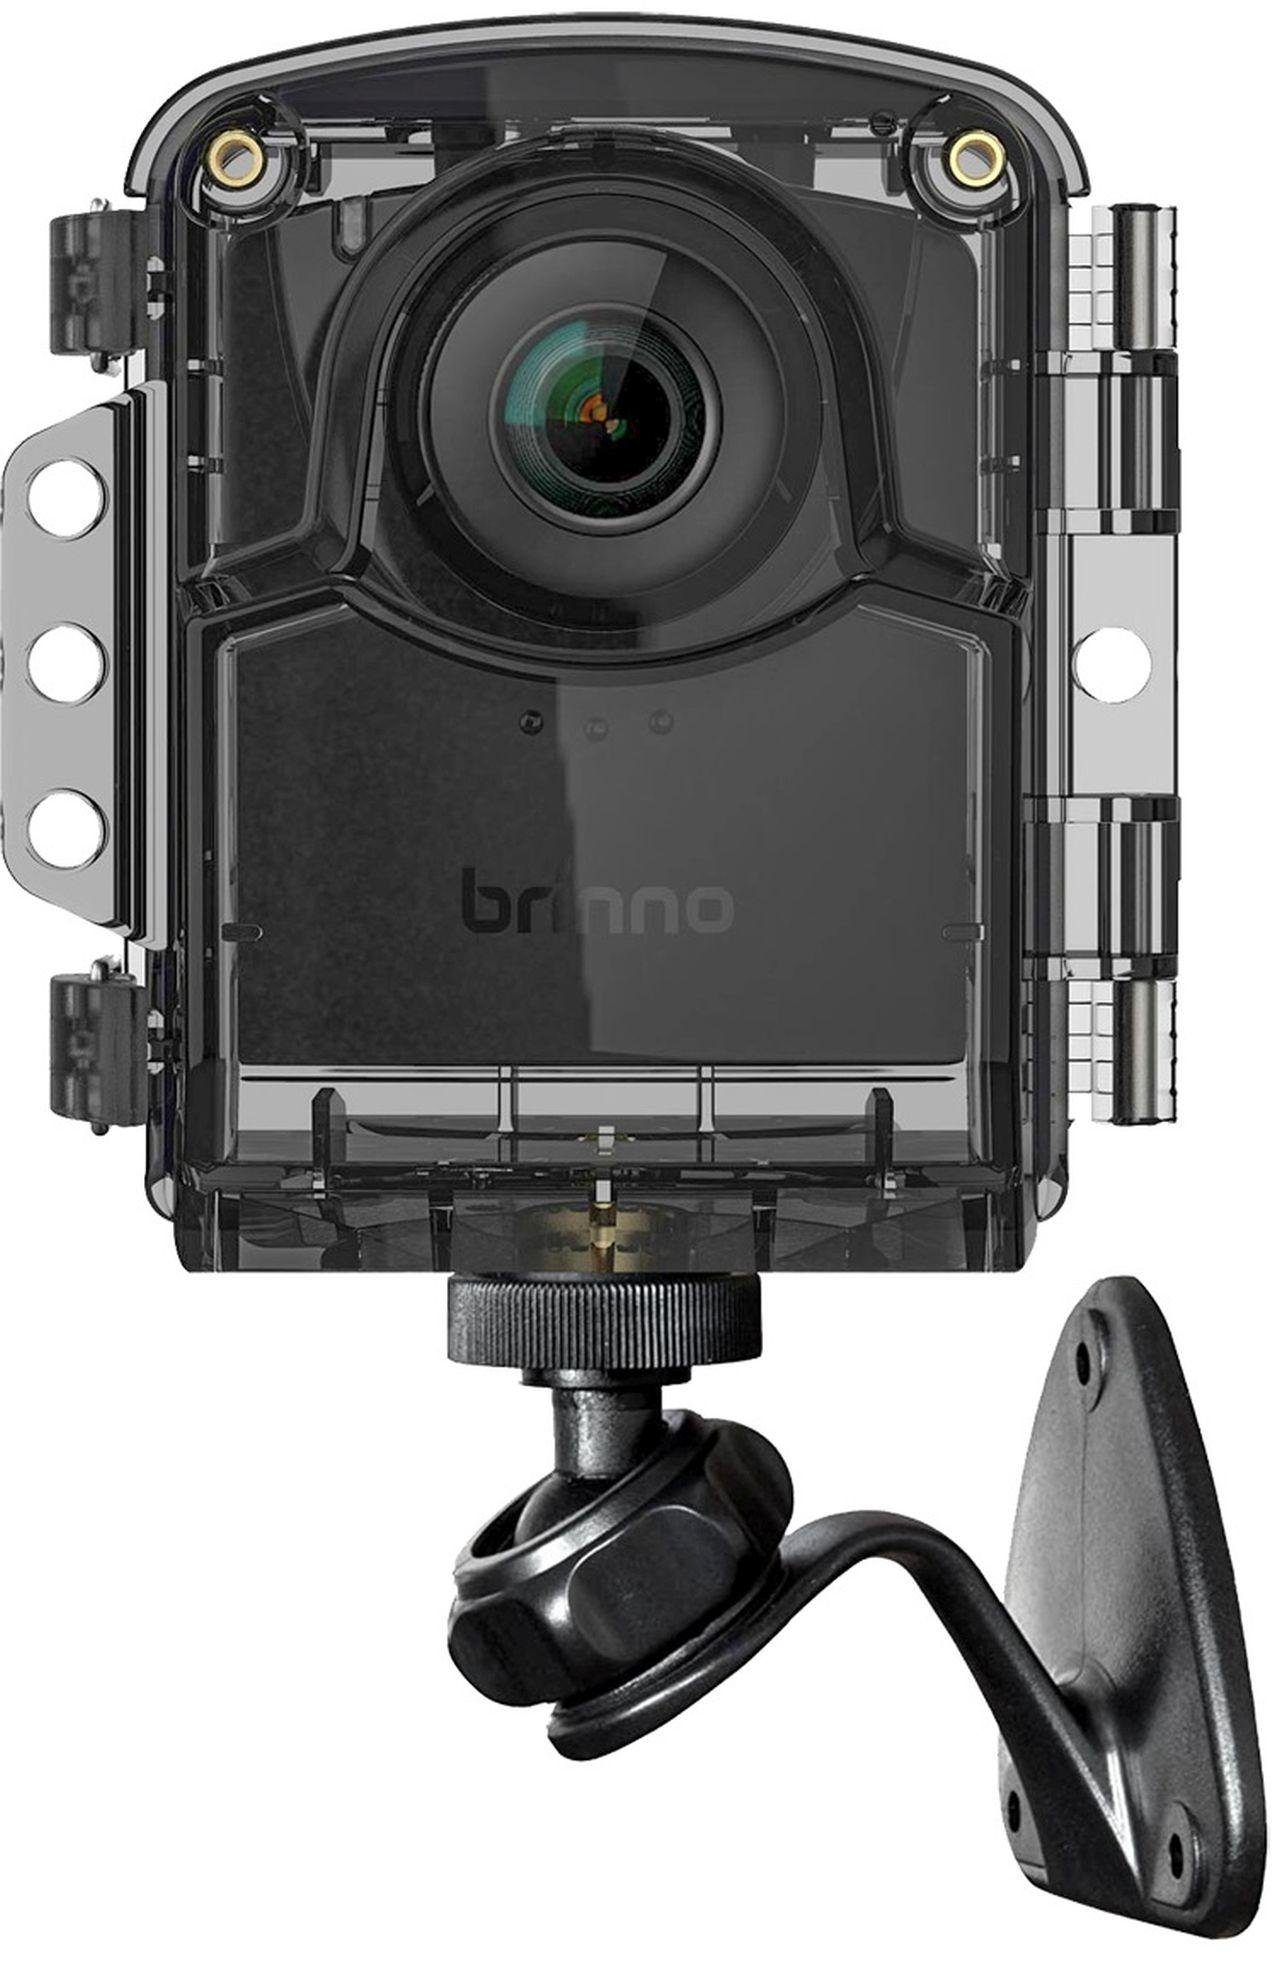 EMPOWER Full TLC2020M brinno HDR Zeitraffer-Kamera Kompaktkamera HD Bun